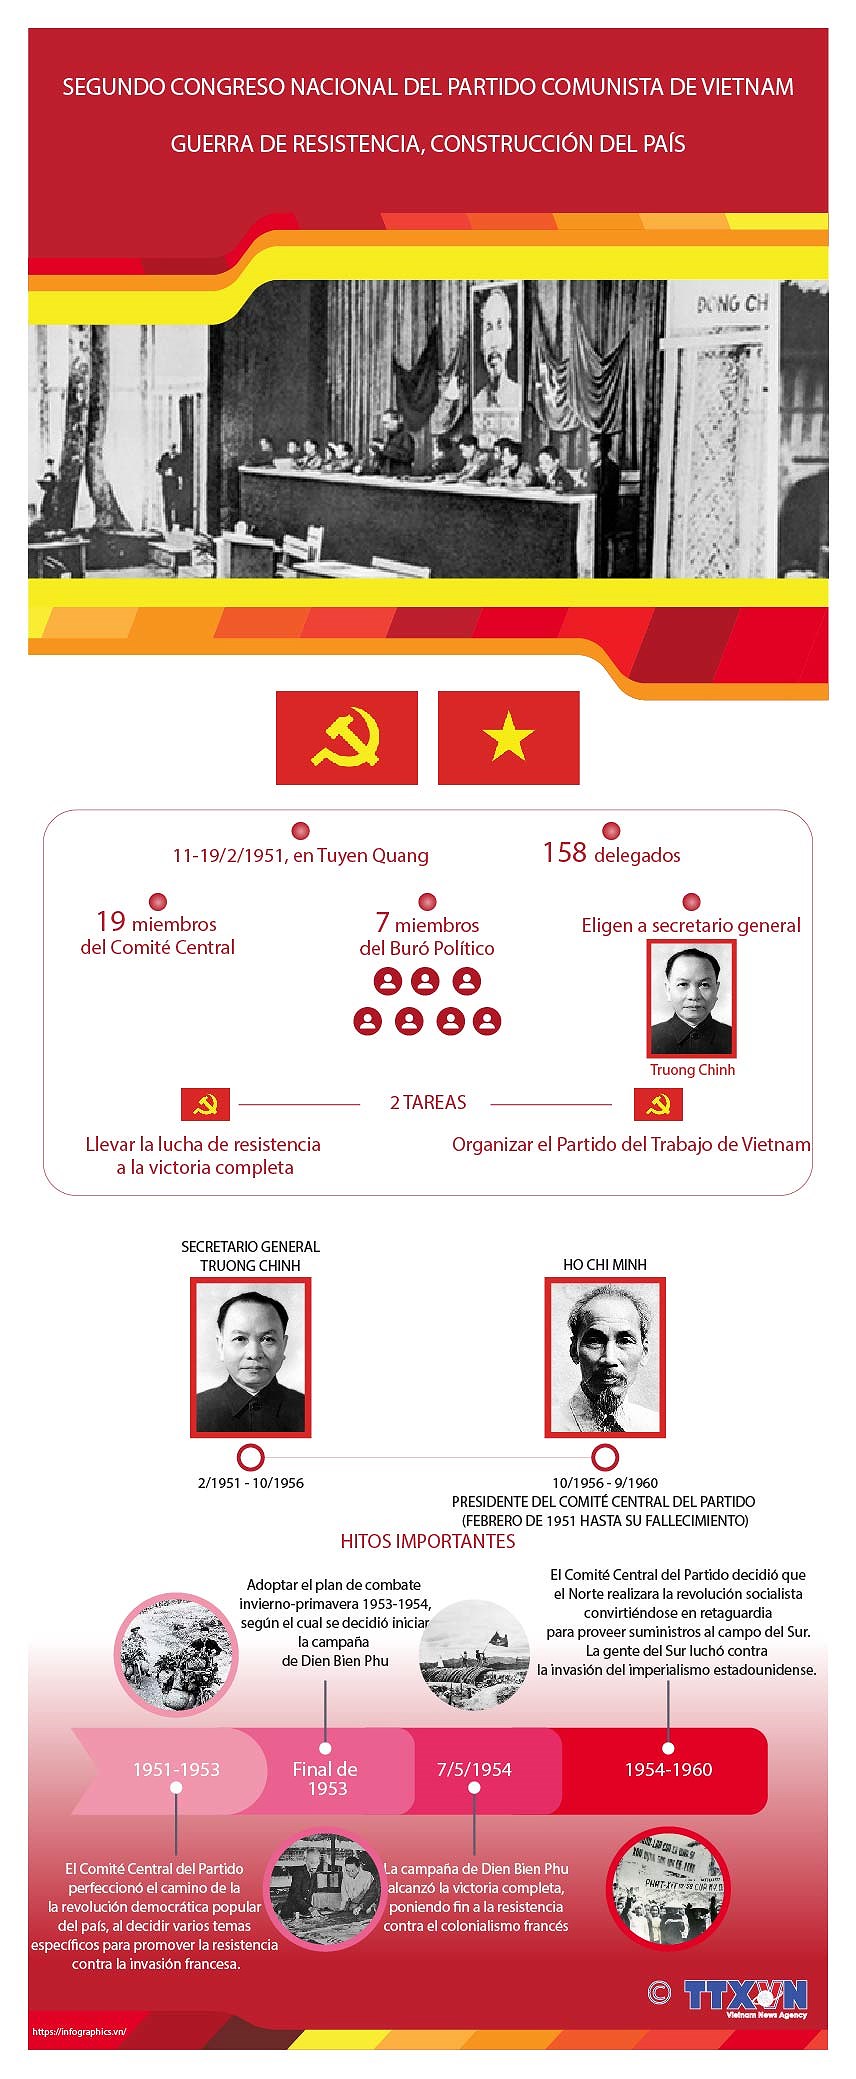 Segundo Congreso Nacional del Partido Comunista de Vietnam: Guerra de resistencia, construccion del pais hinh anh 1